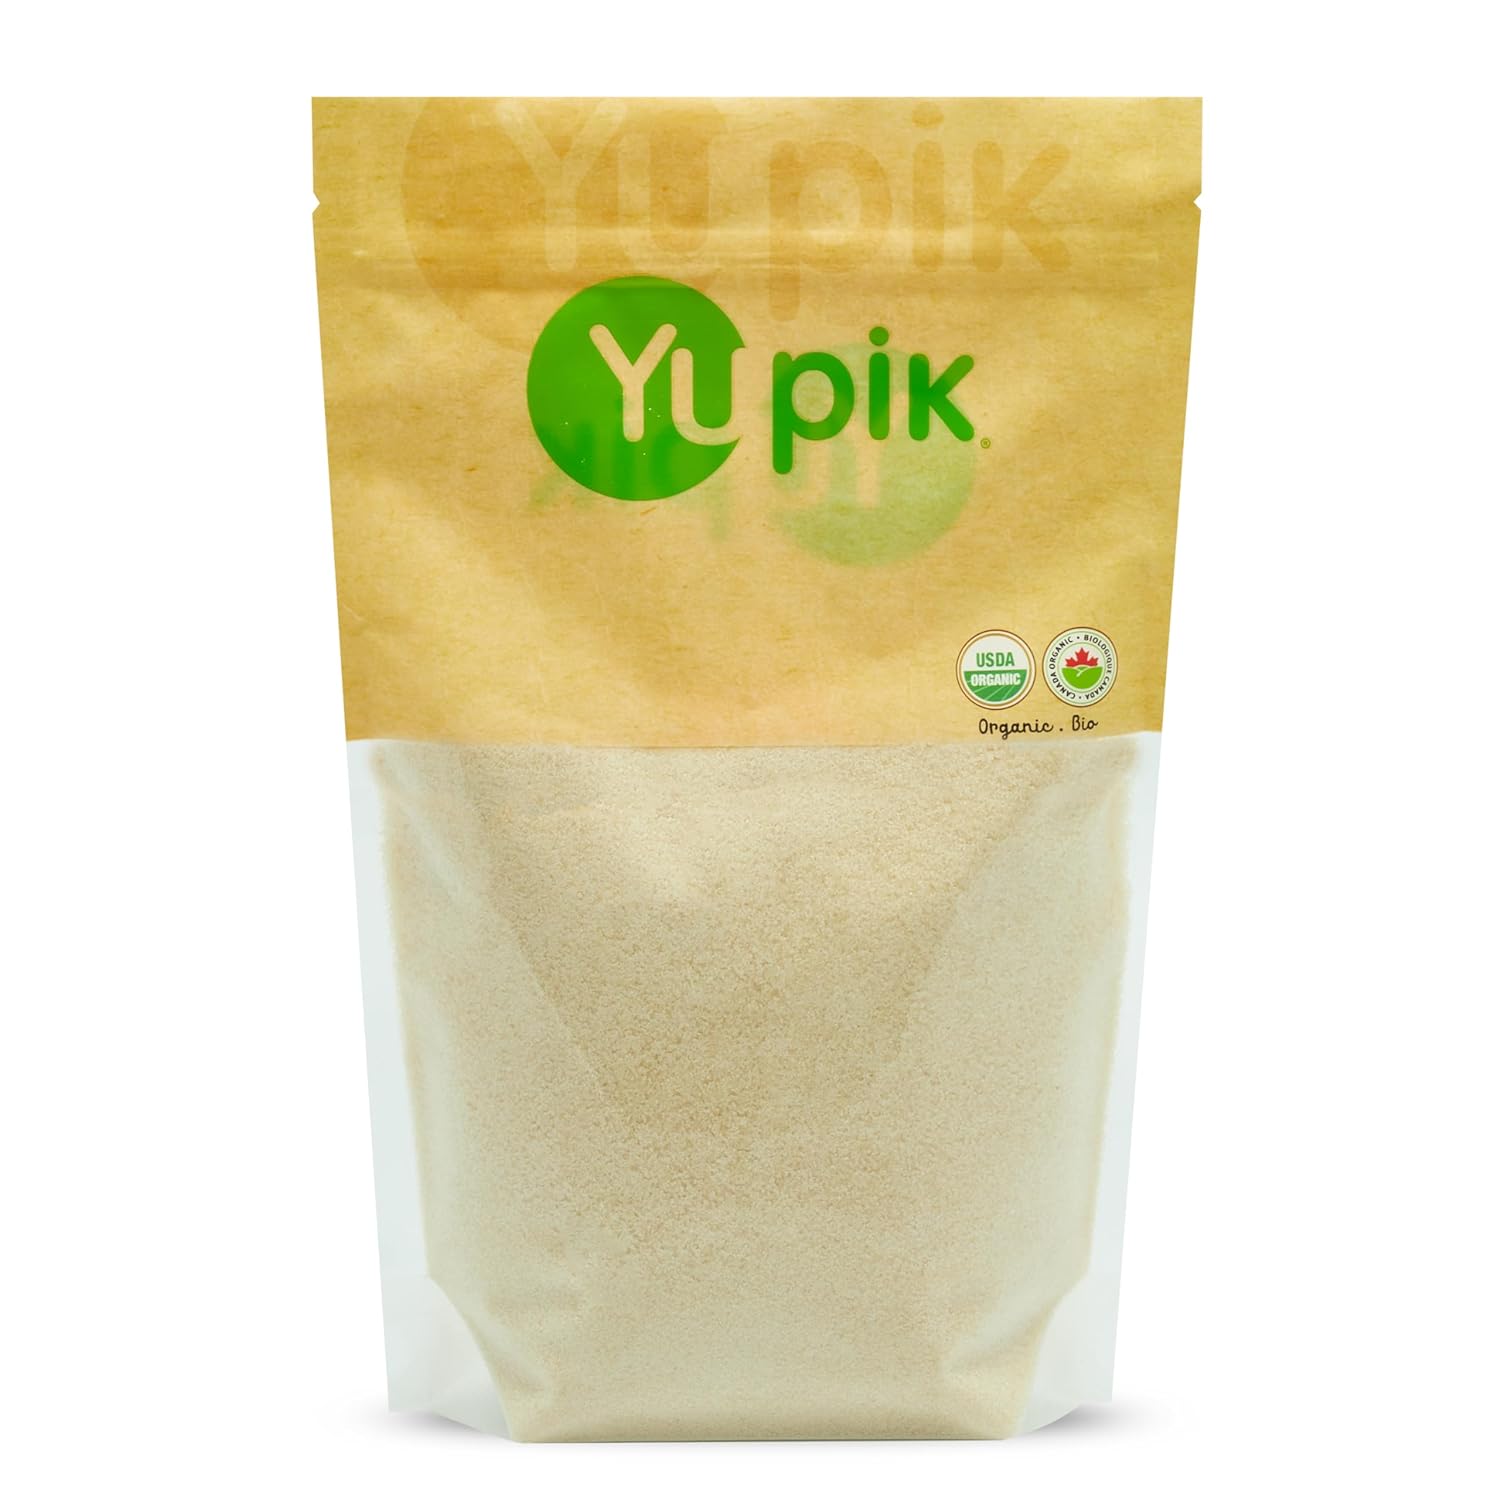 Yupik Organic Cane Sugar, 2.2 Lb, Gluten-Free, Non-Gmo, Sugar Substitute